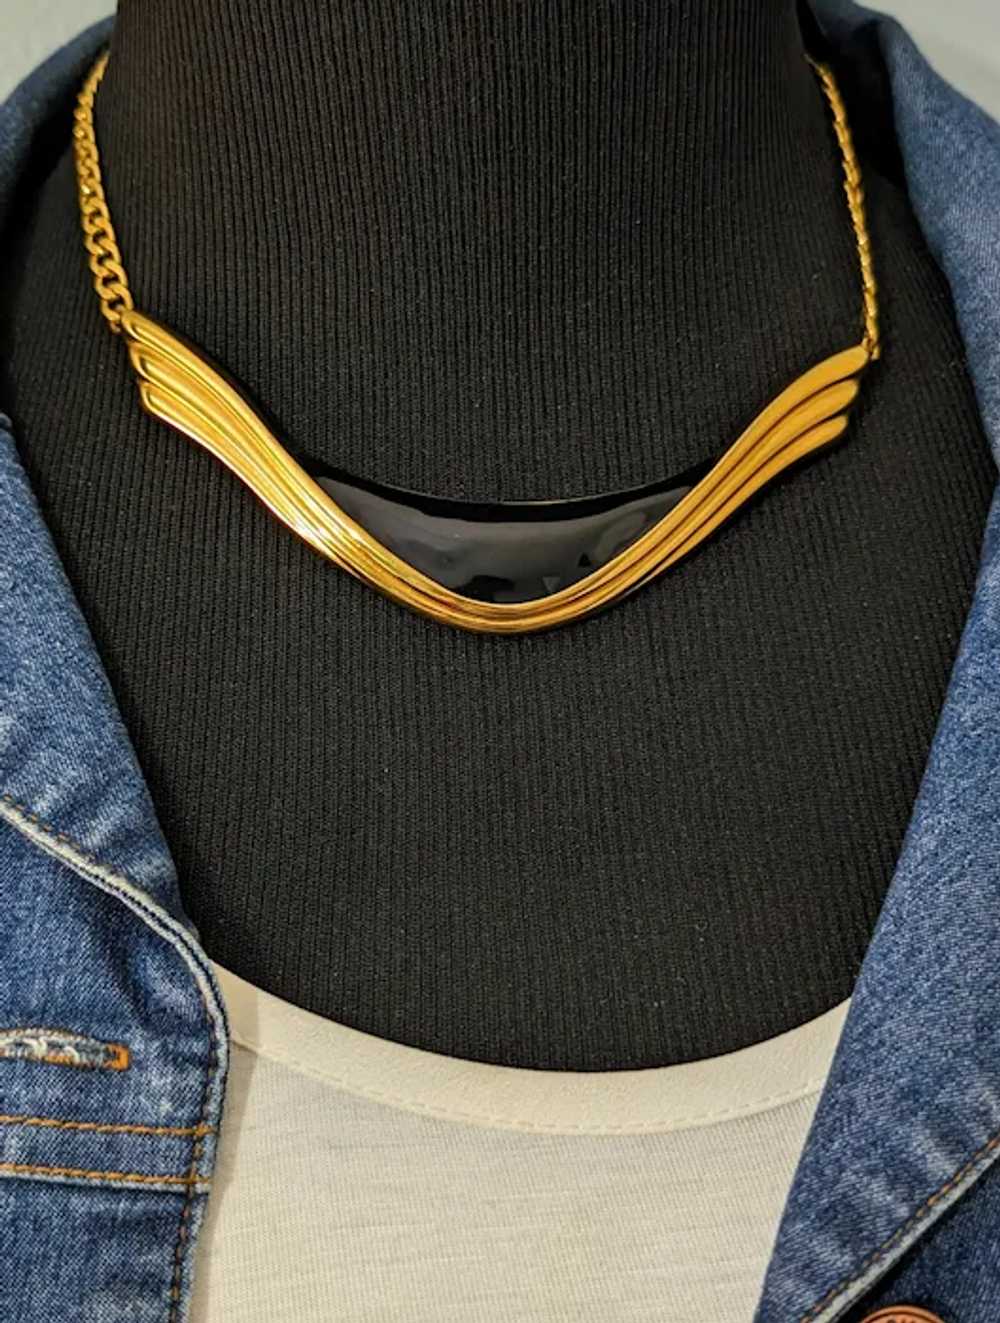 Monet Black Enamel Gold Tone Choker Necklace - image 2